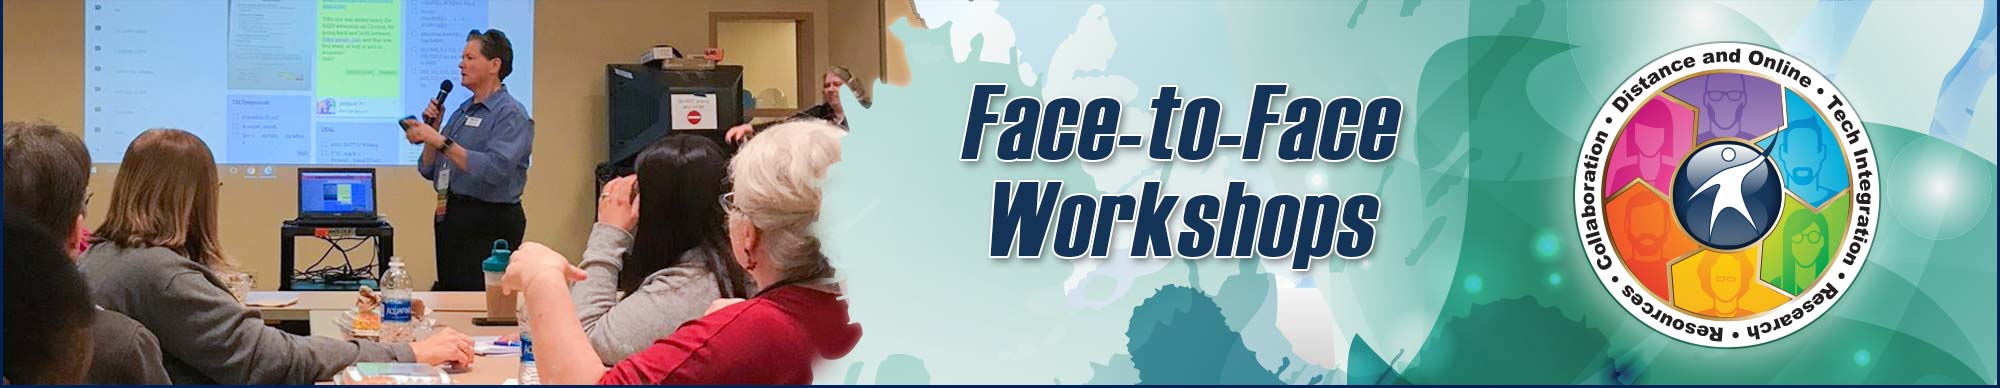 Face-to-Face Workshops banner